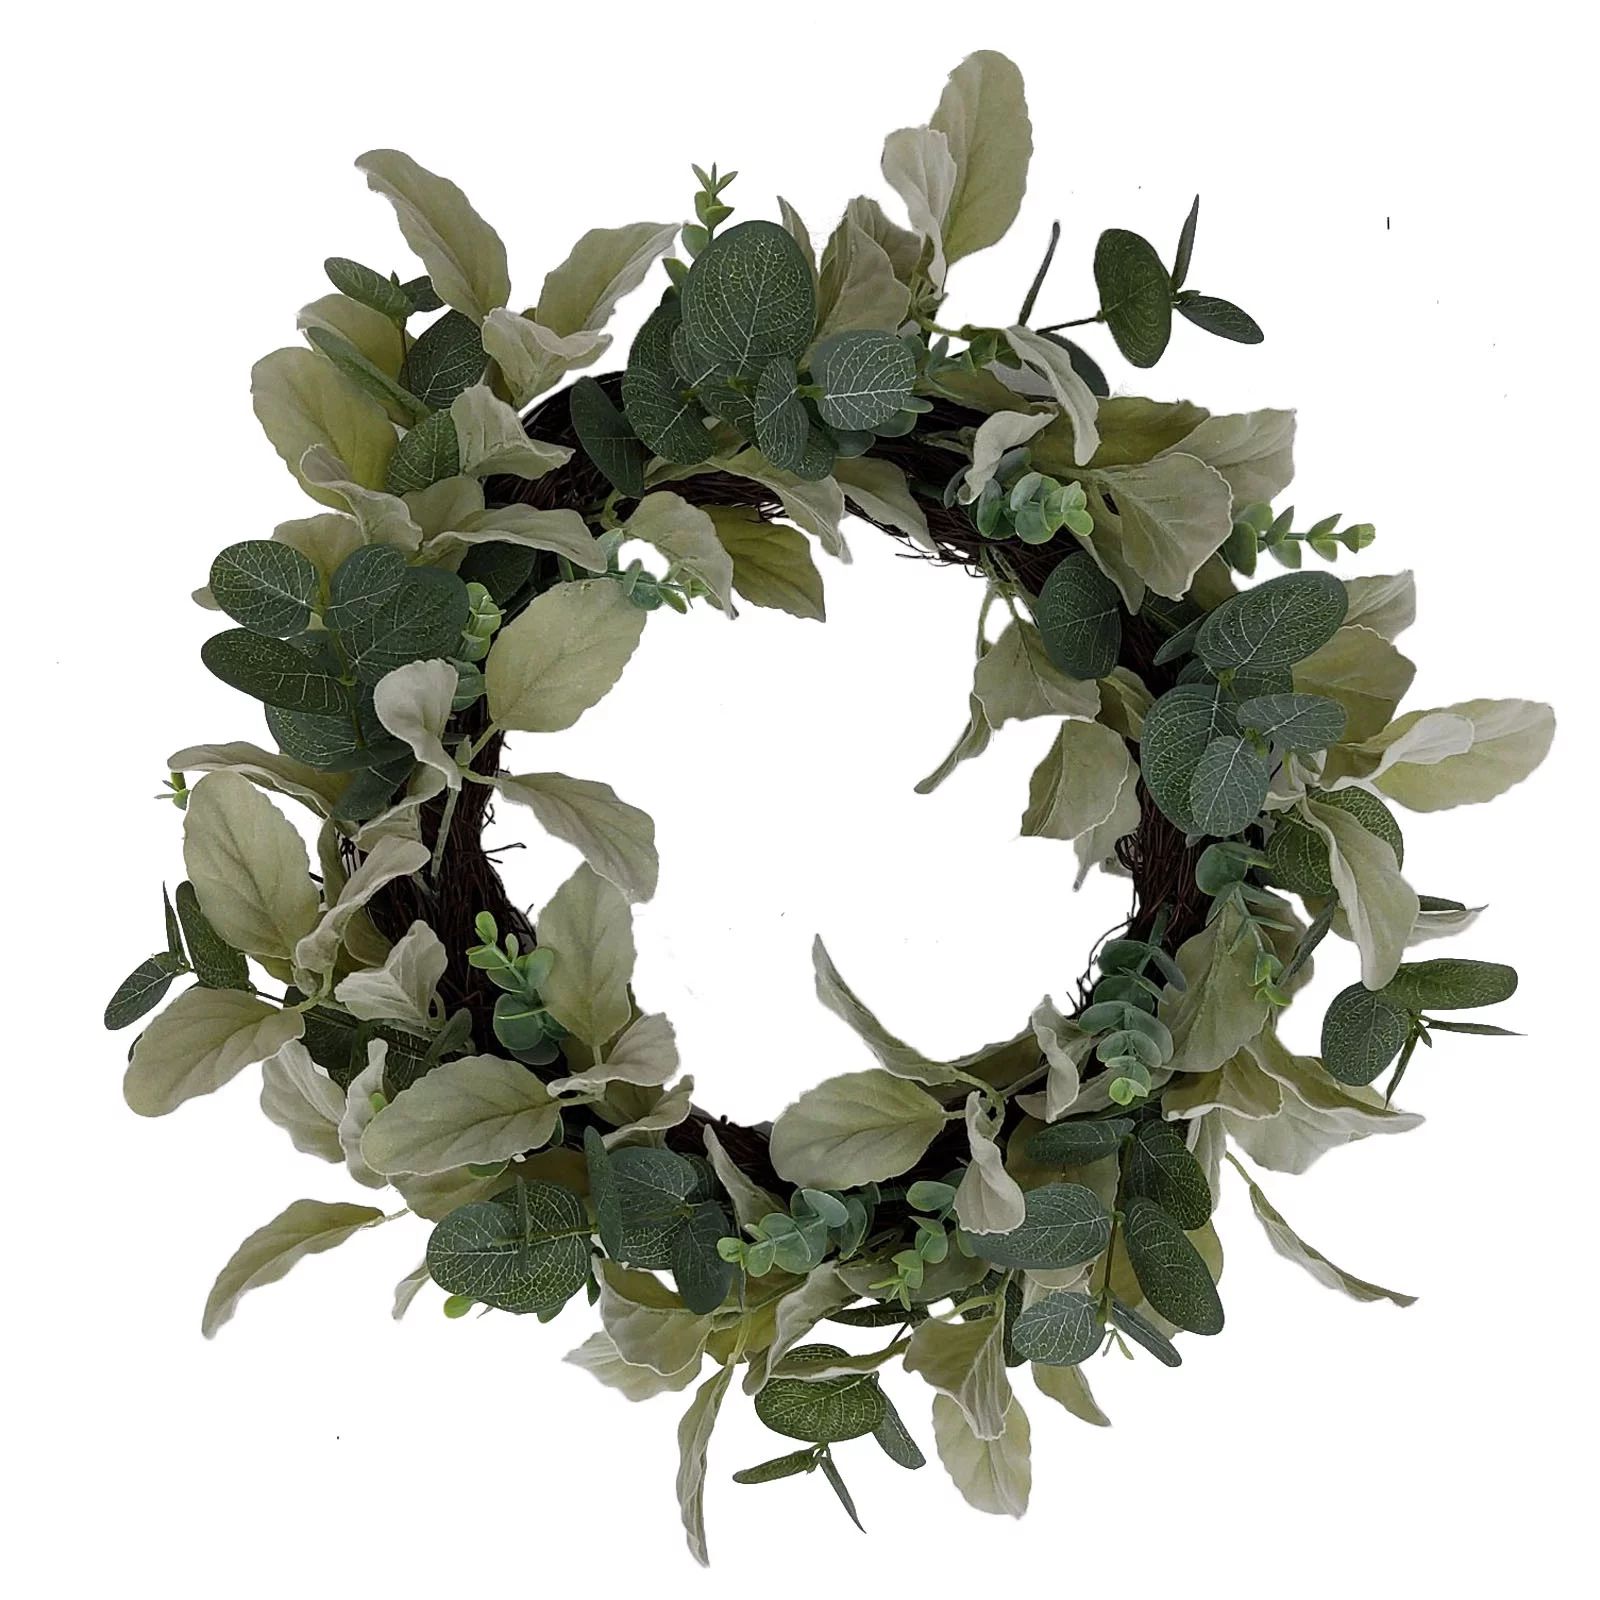 Mainstays 18in Indoor Artificial Evergreen Plant Wreath, Green Color. | Walmart (US)